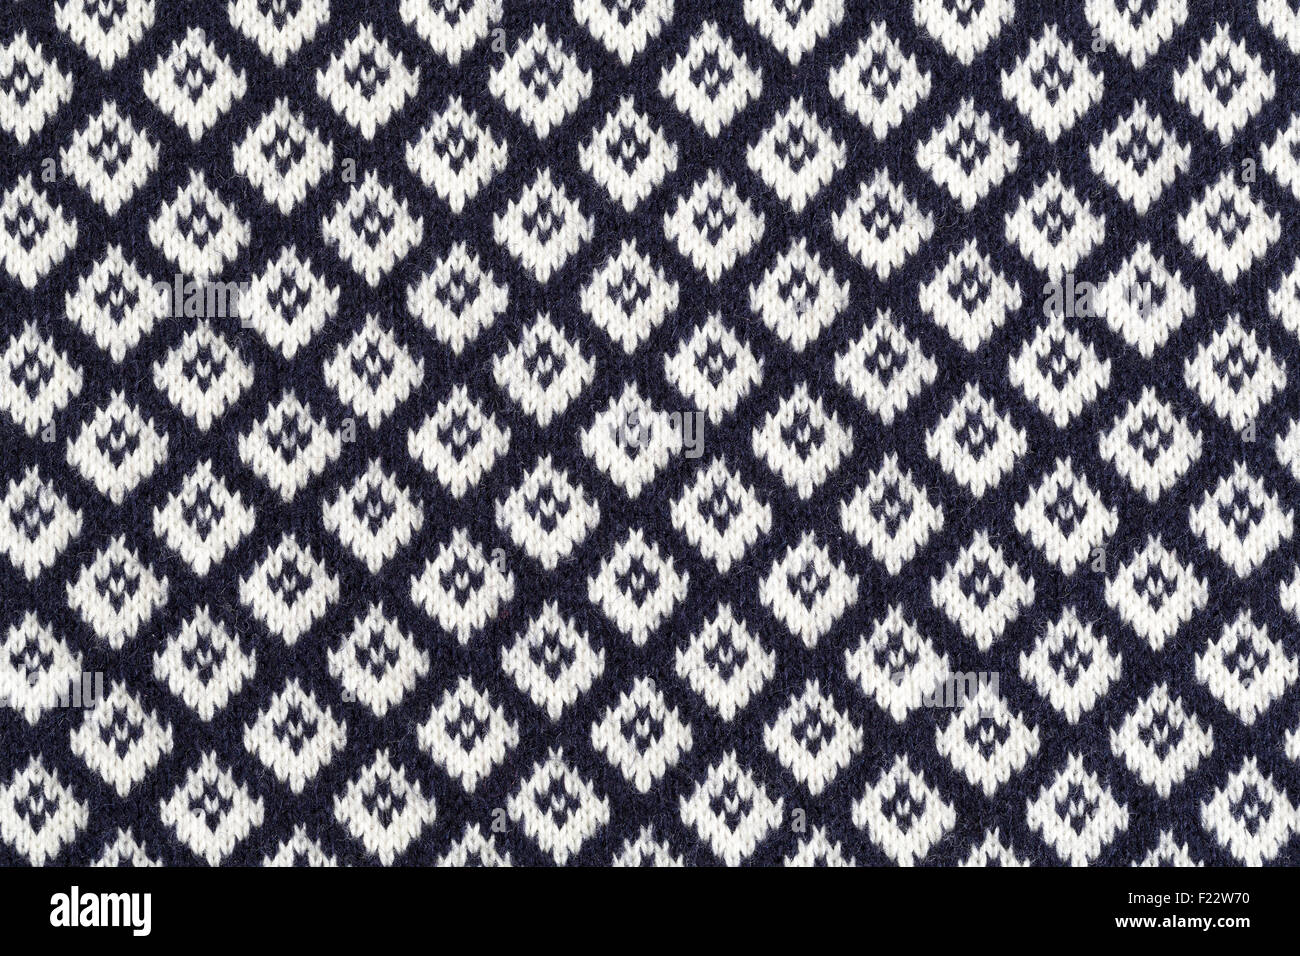 Knitting pattern, pattern square. Woolen cloth. Stock Photo